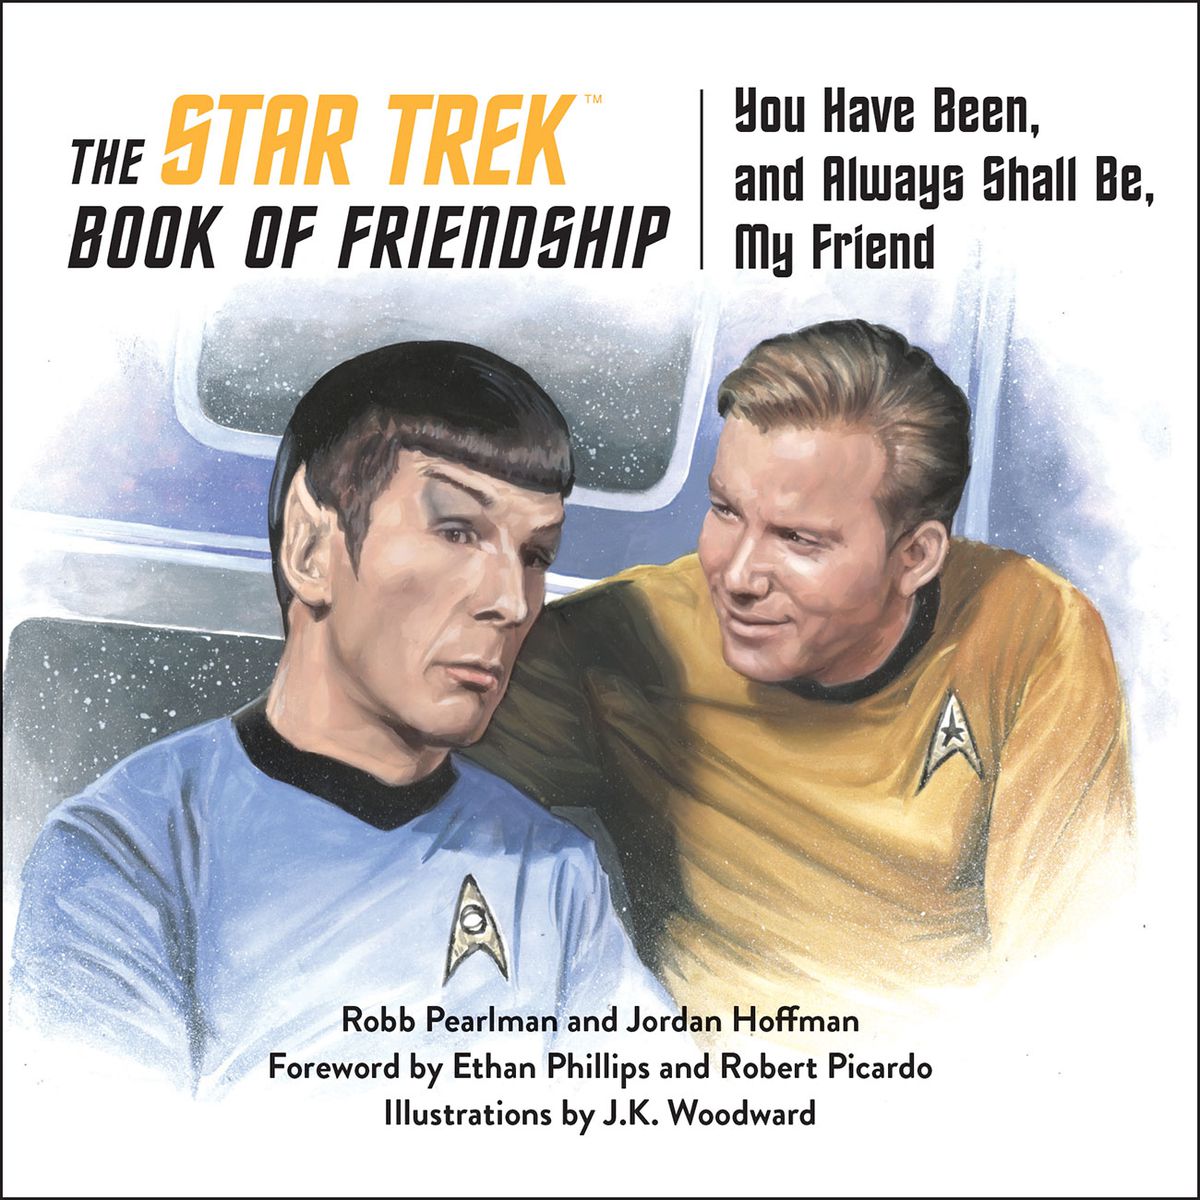 The Star Trek Book of Friendship dives deep into Picard and Riker’s eternal bro-bond